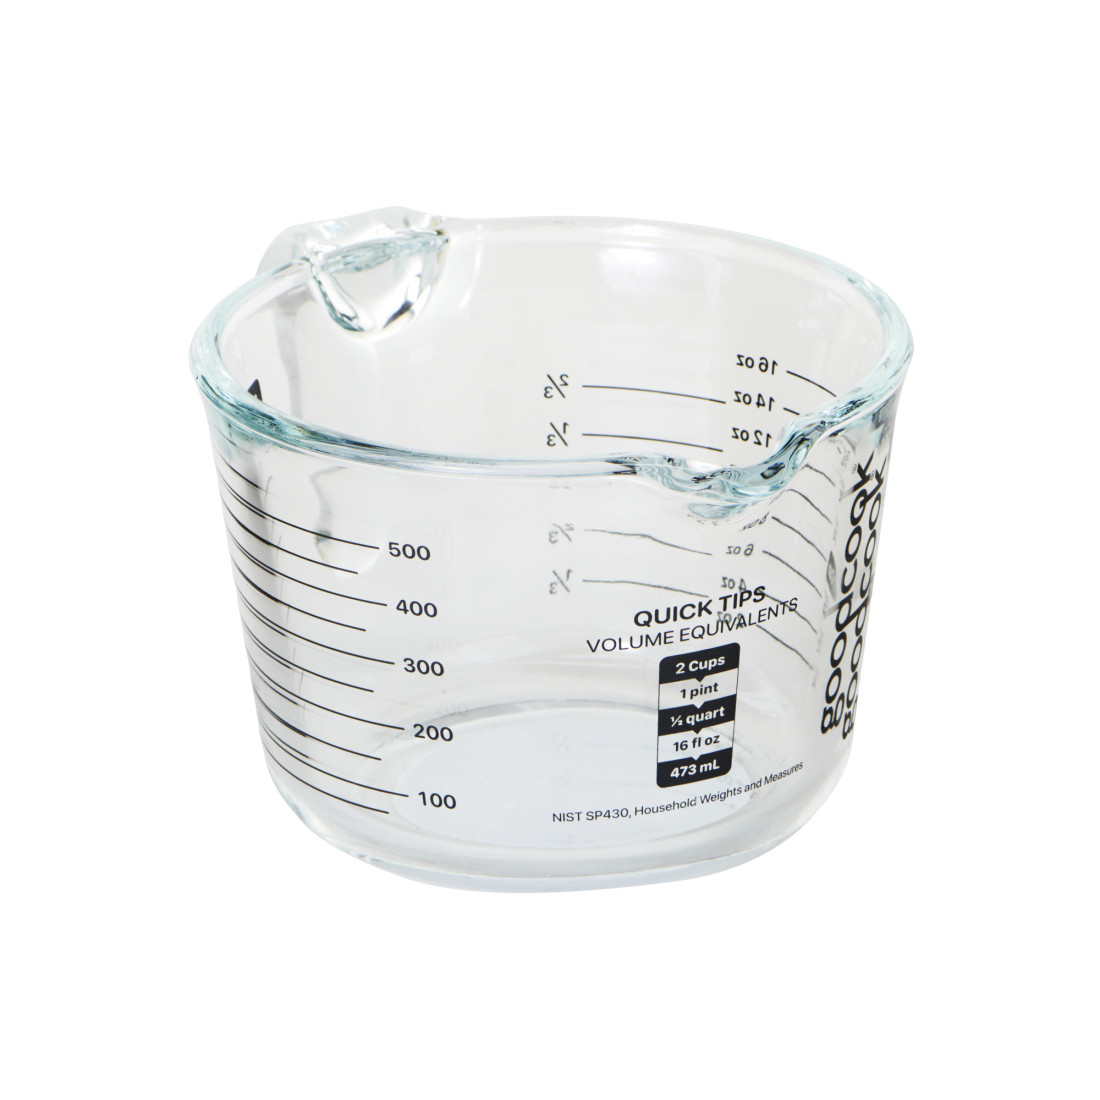 Bradshaw 2 Cup Plastic Measuring Cup